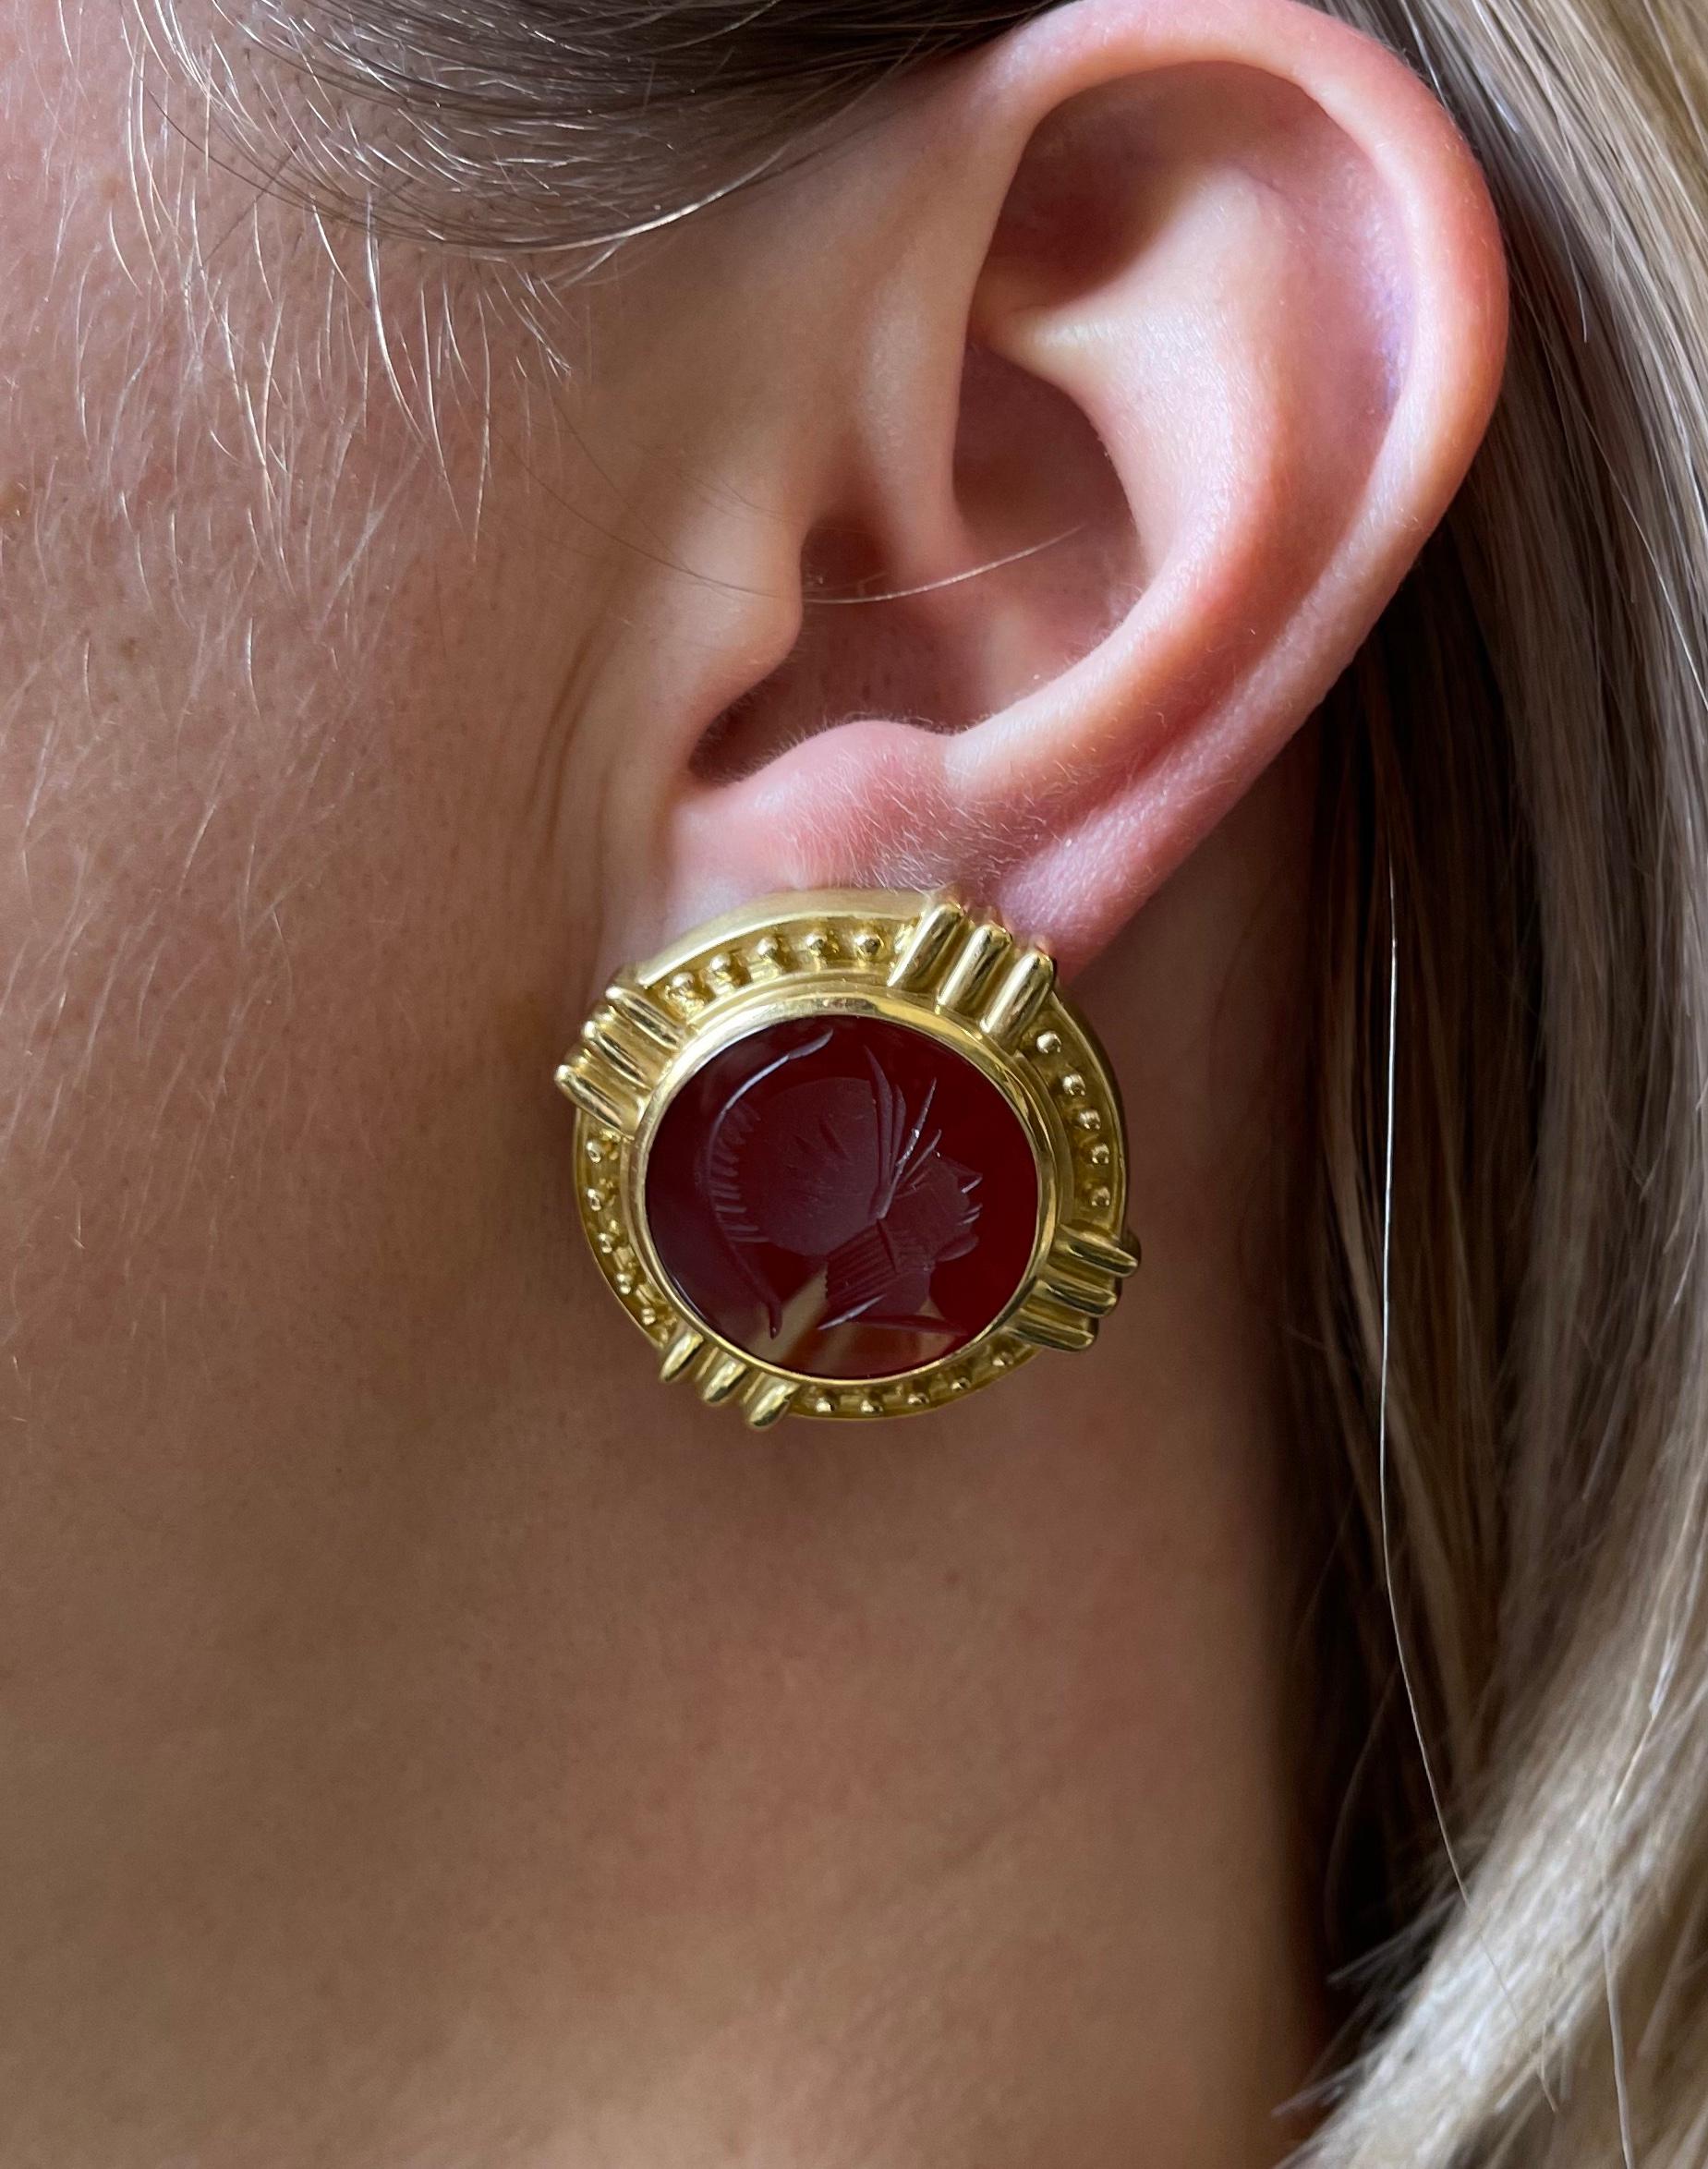 Pair of large 18k gold earrings, set with carnelian intaglios, depicting Roman warrior profile. Earrings measure 1.25